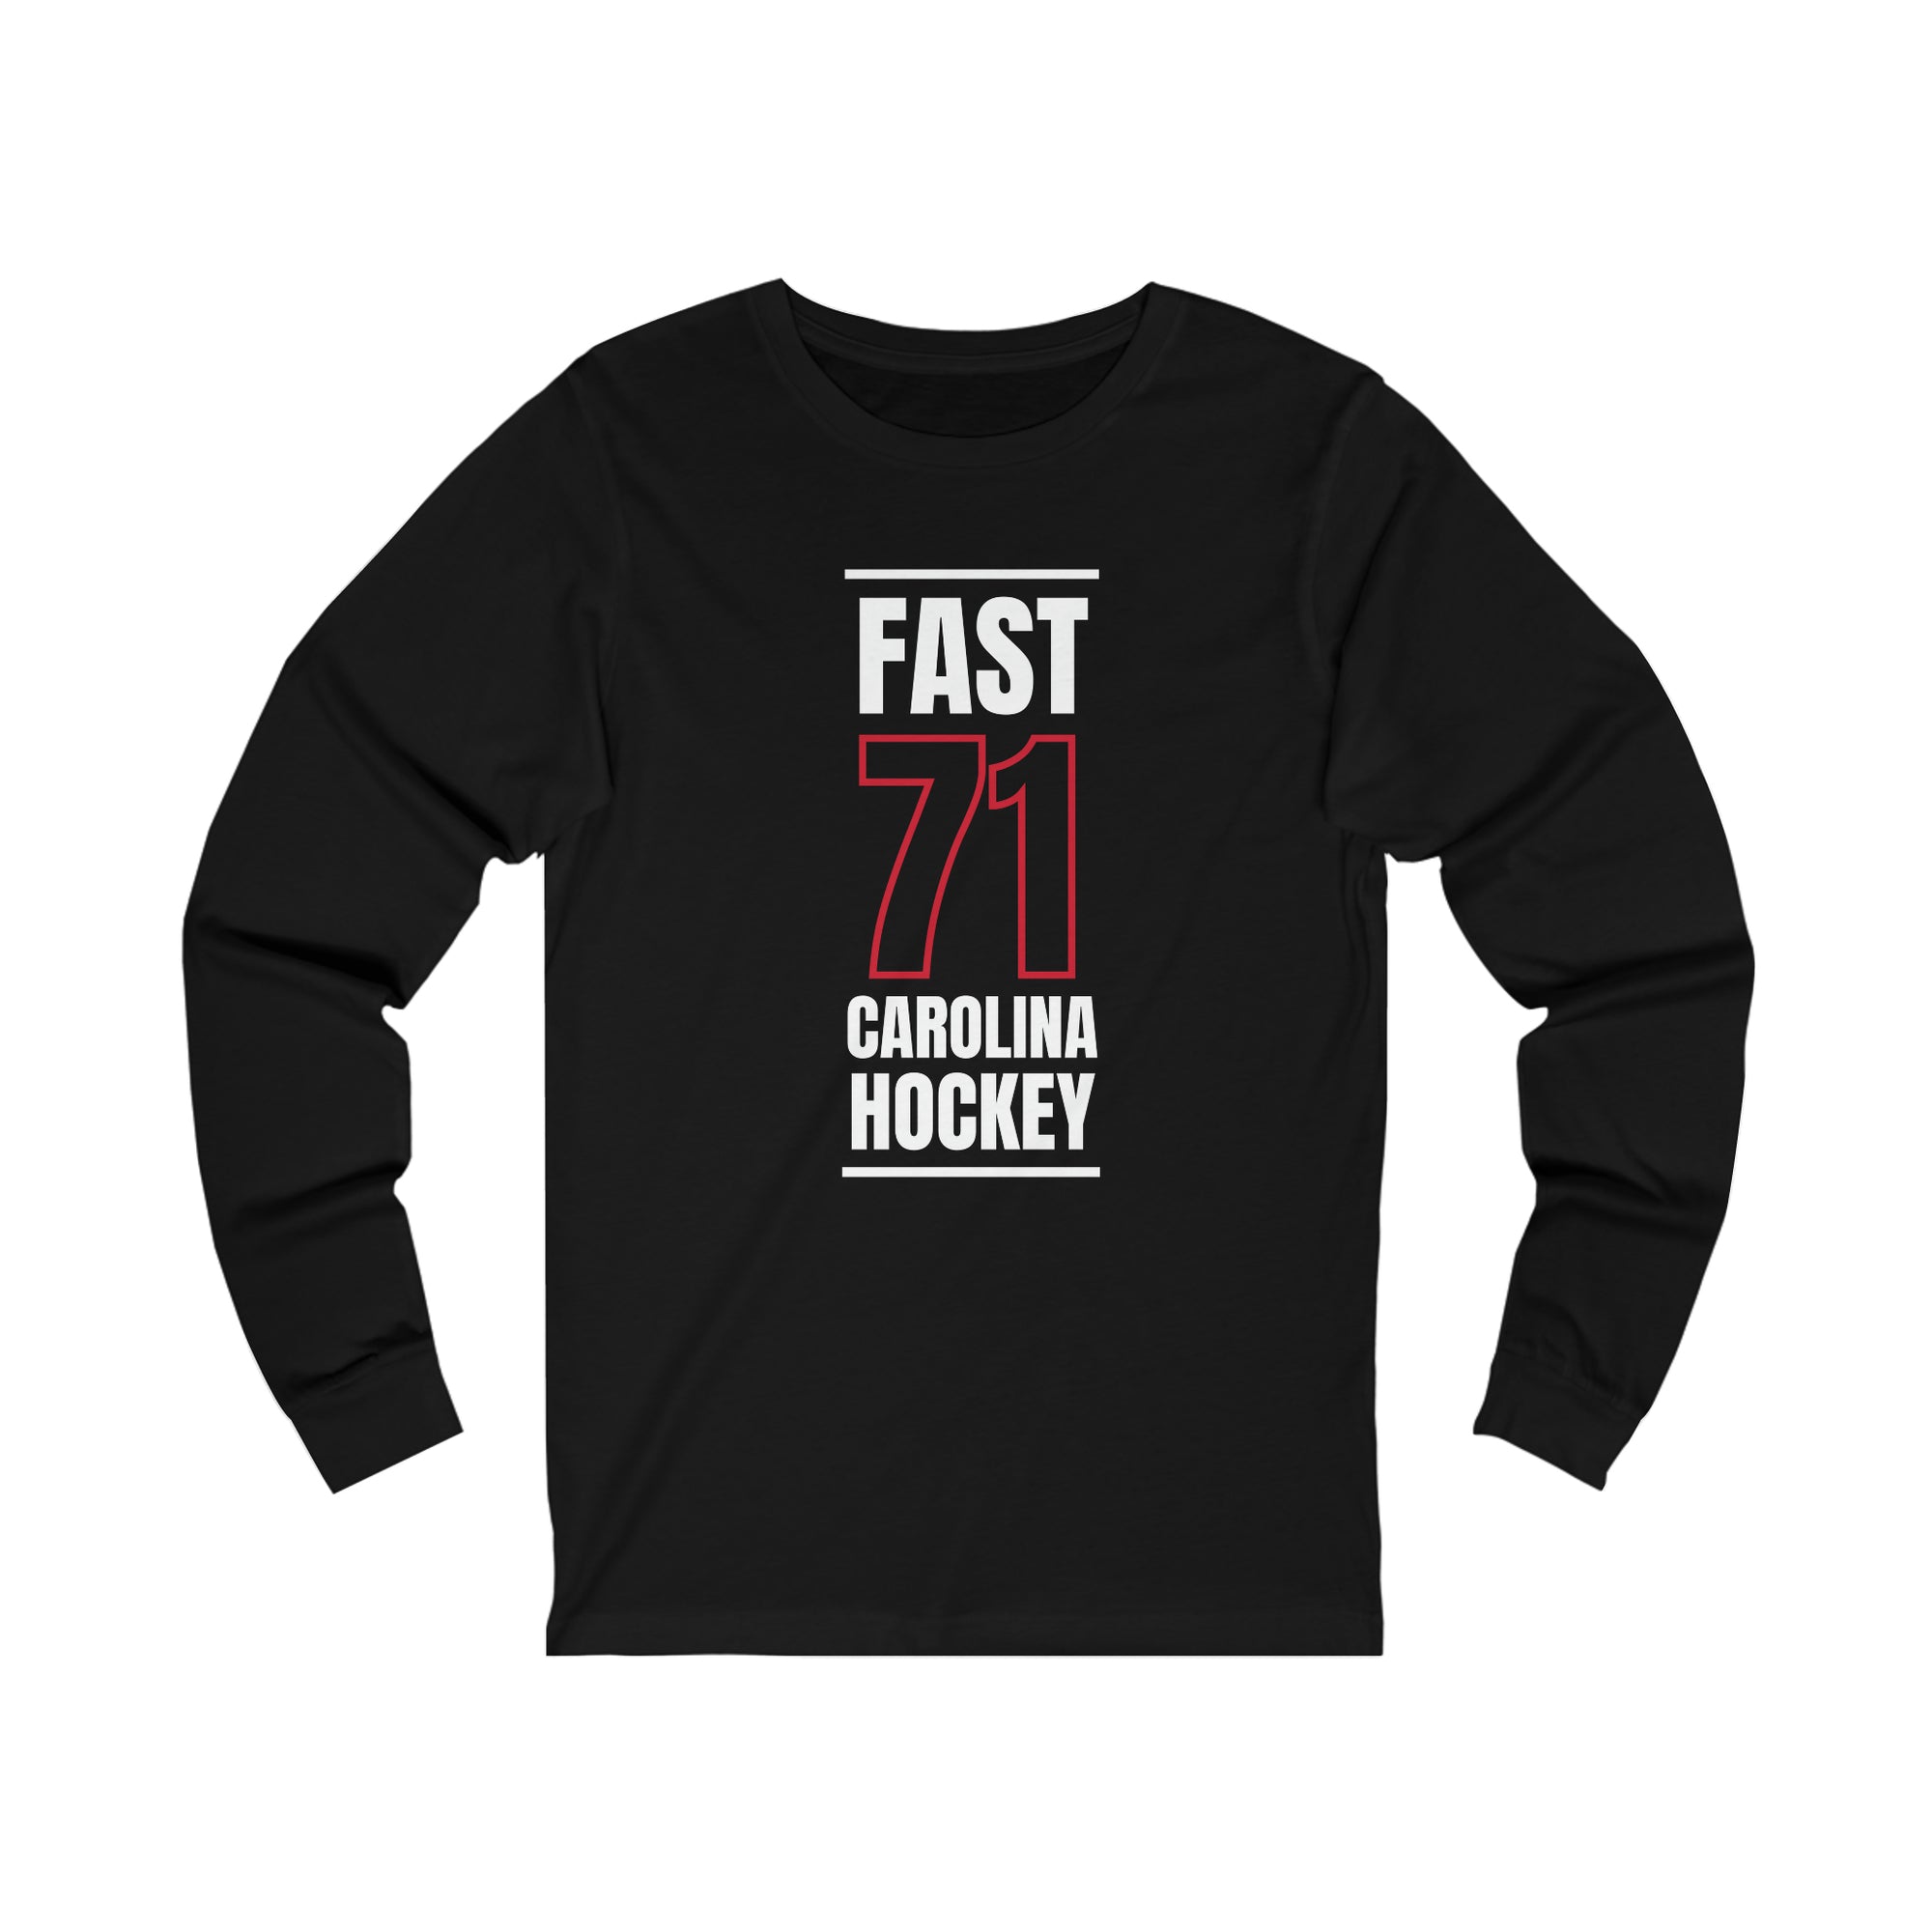 Fast 71 Carolina Hockey Black Vertical Design Unisex Jersey Long Sleeve Shirt